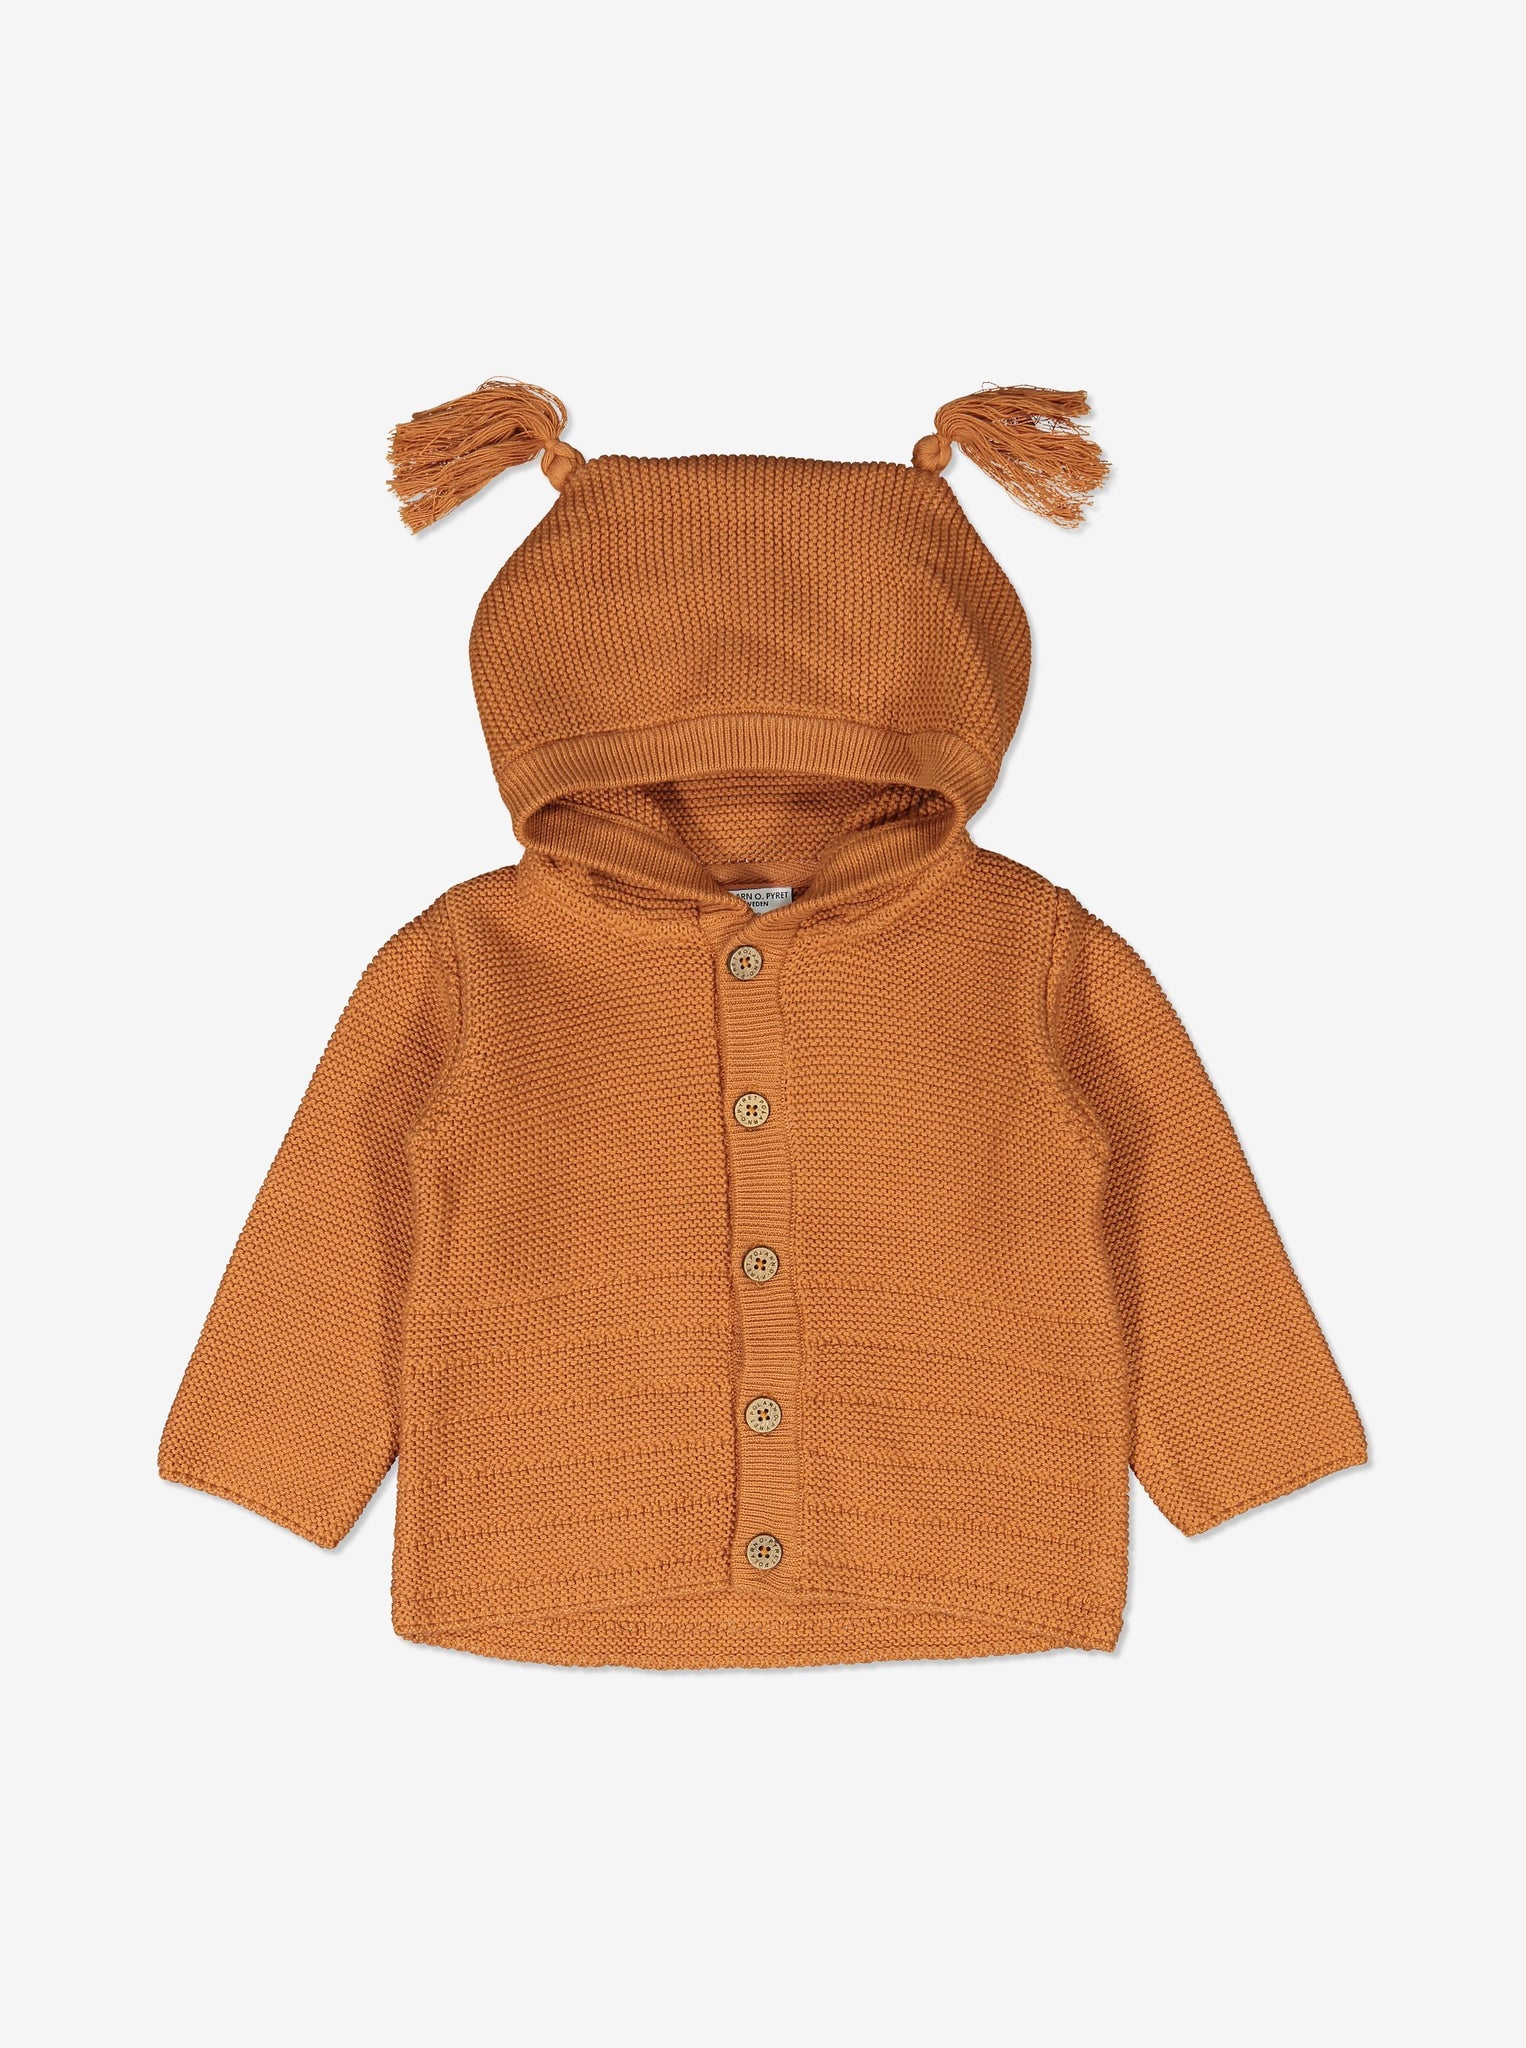 Knitted Organic Baby Boy Cardigan, Unisex Baby Clothes | Polarn O. Pyret UK